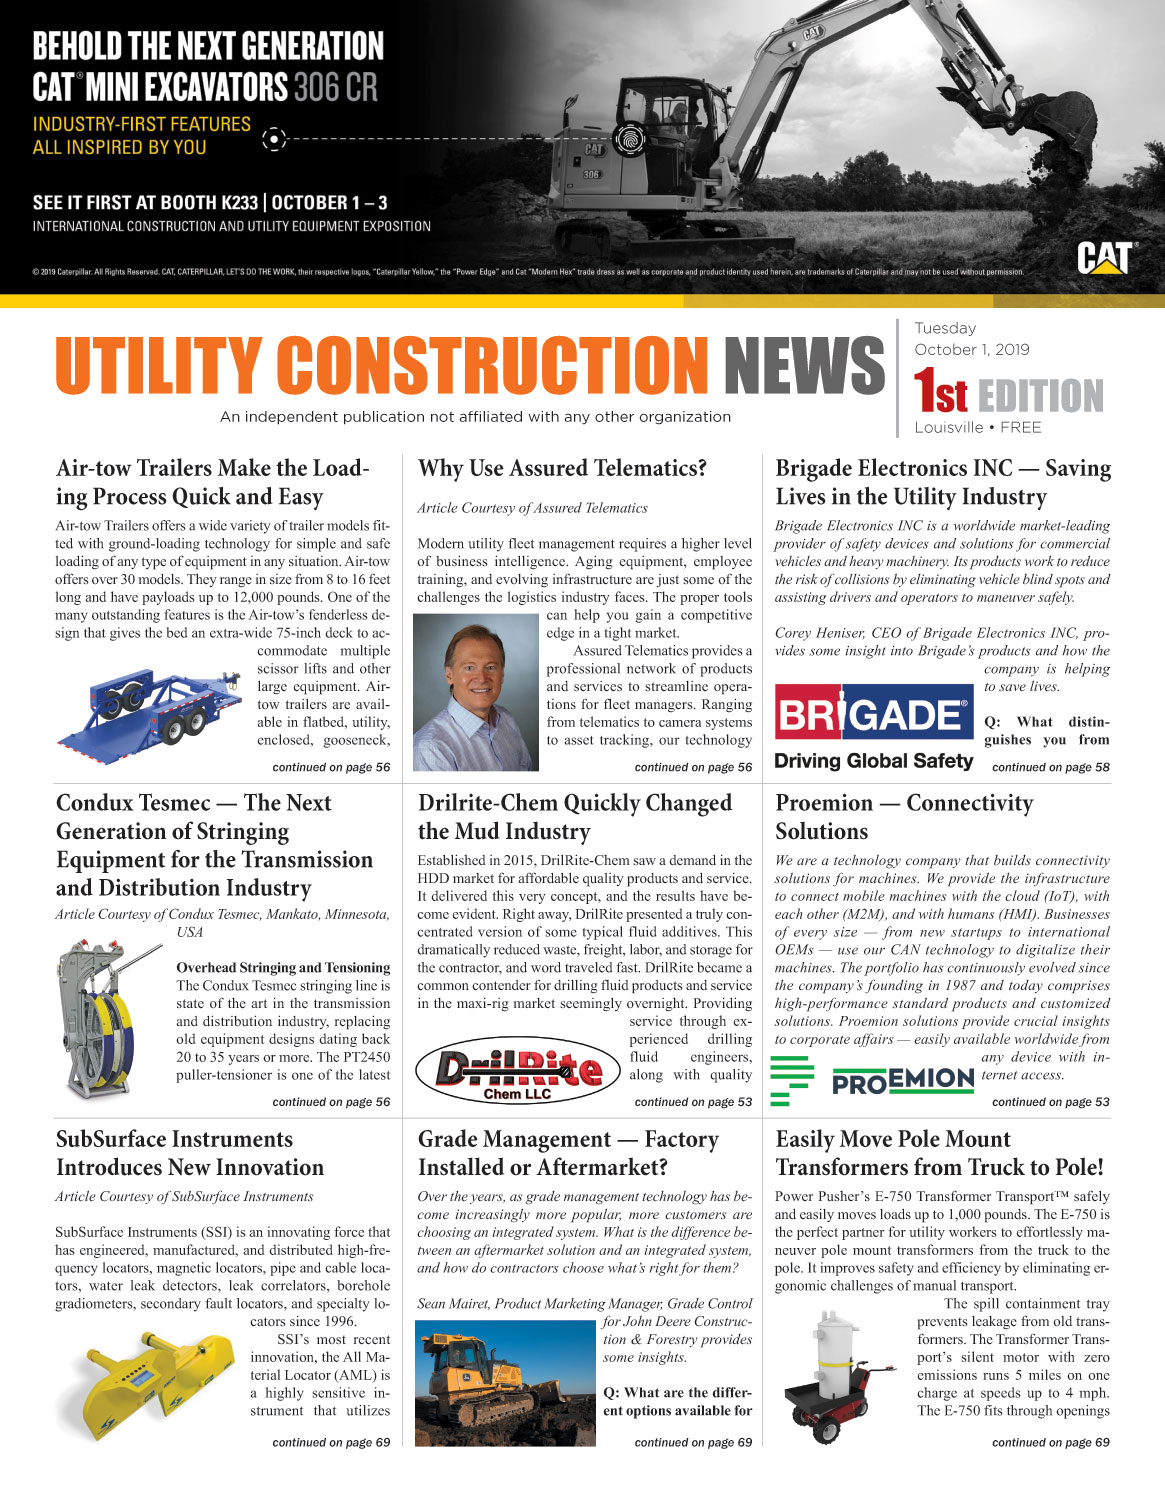 Utility Construction News